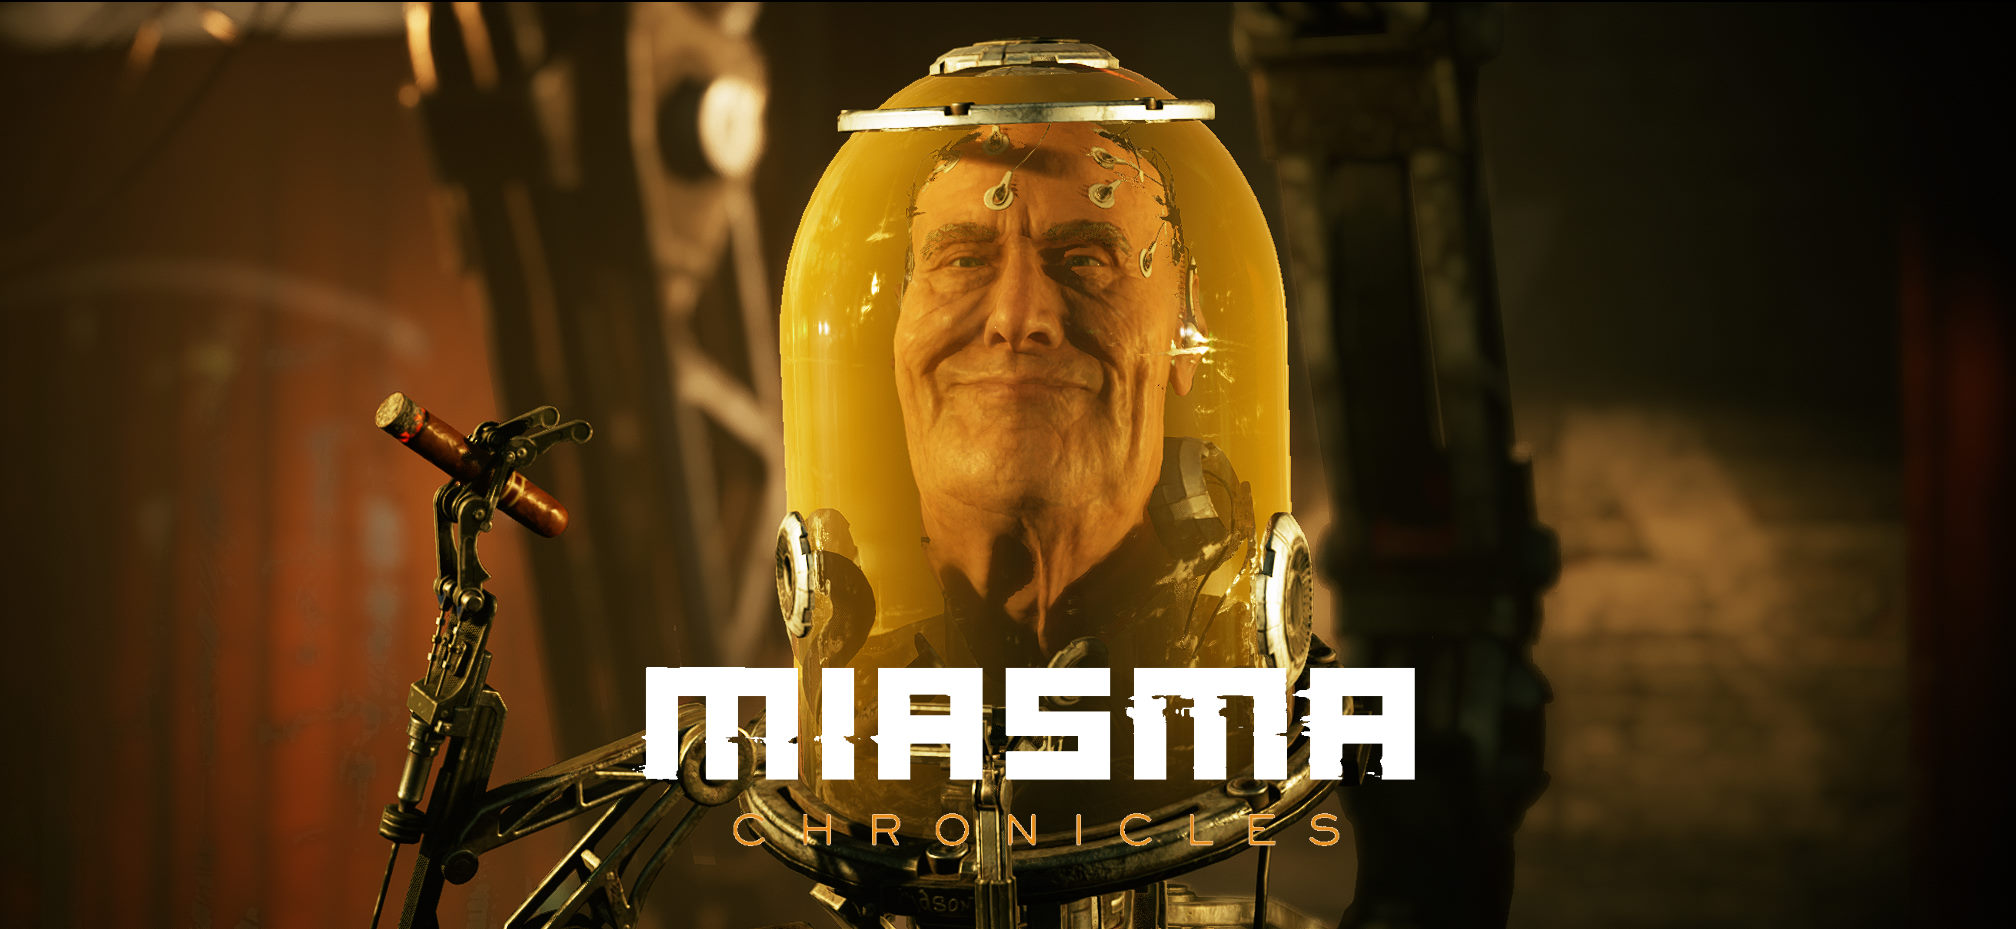 Финал Miasma Chronicles эндинг | Озвучка GFGame на Русском - Игрофильм